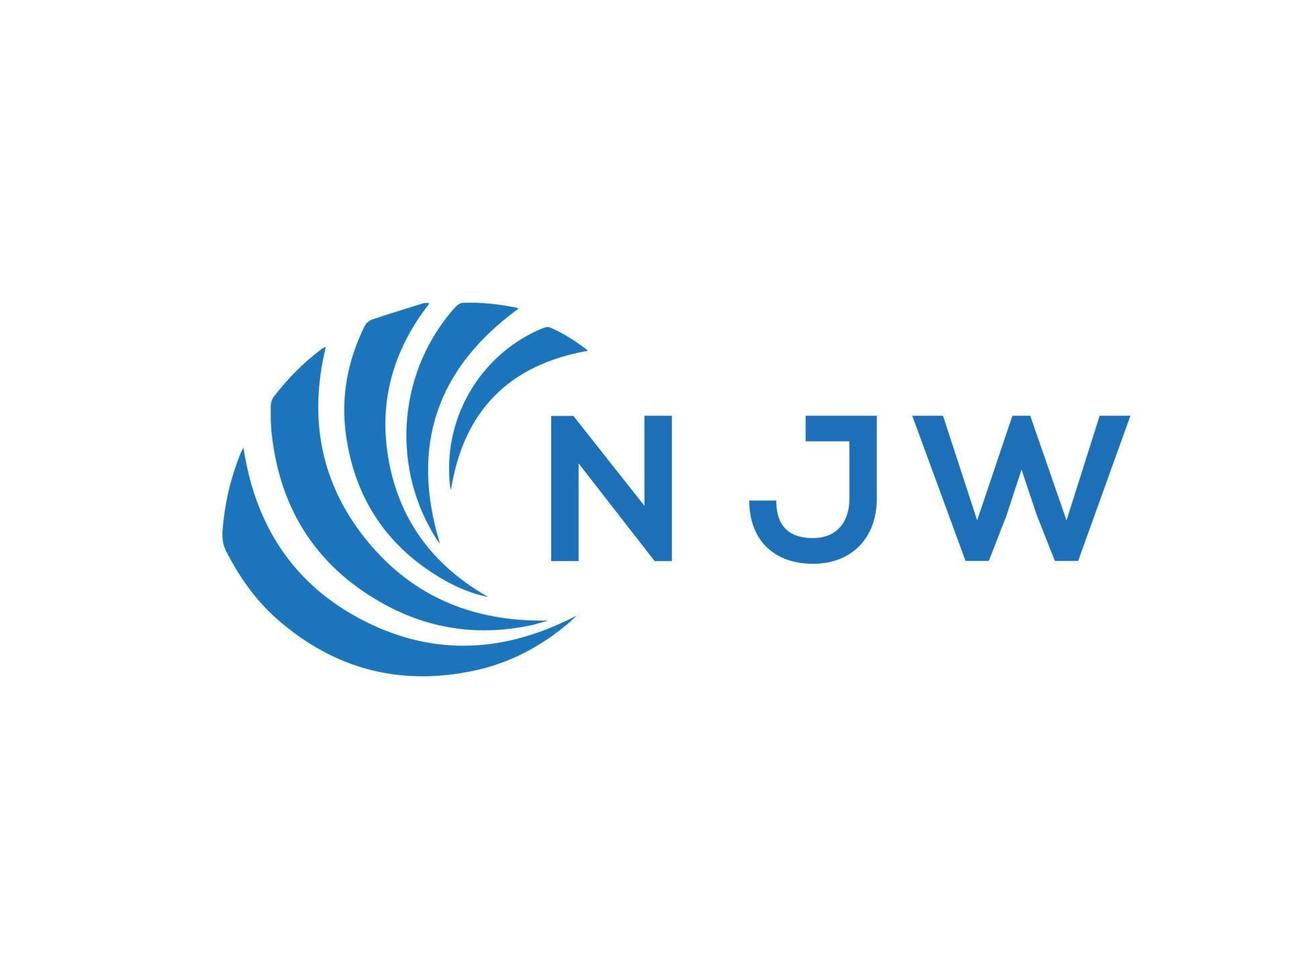 NJW creative circle letter logo concept. NJW letter design. vector